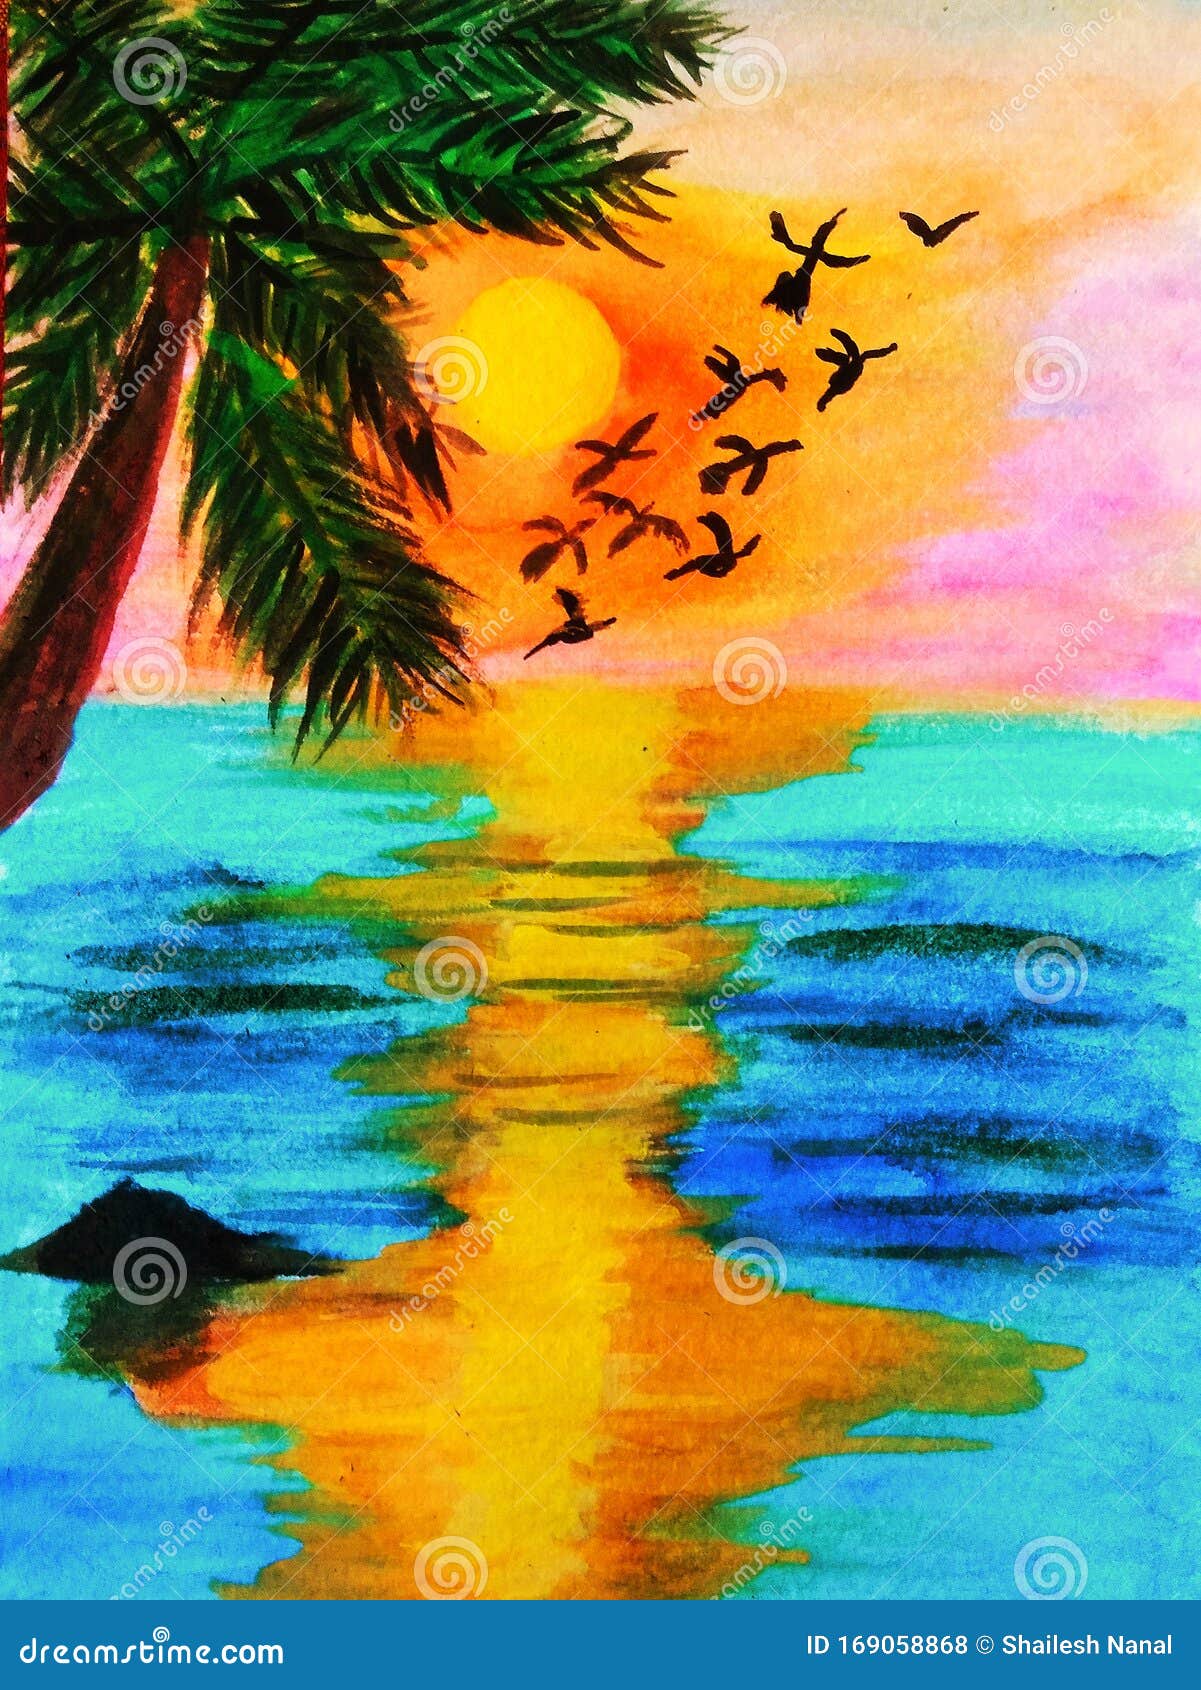 Sunrise Birds And Palm Tree Drawing Stock Illustration Illustration Of Painting Reflection